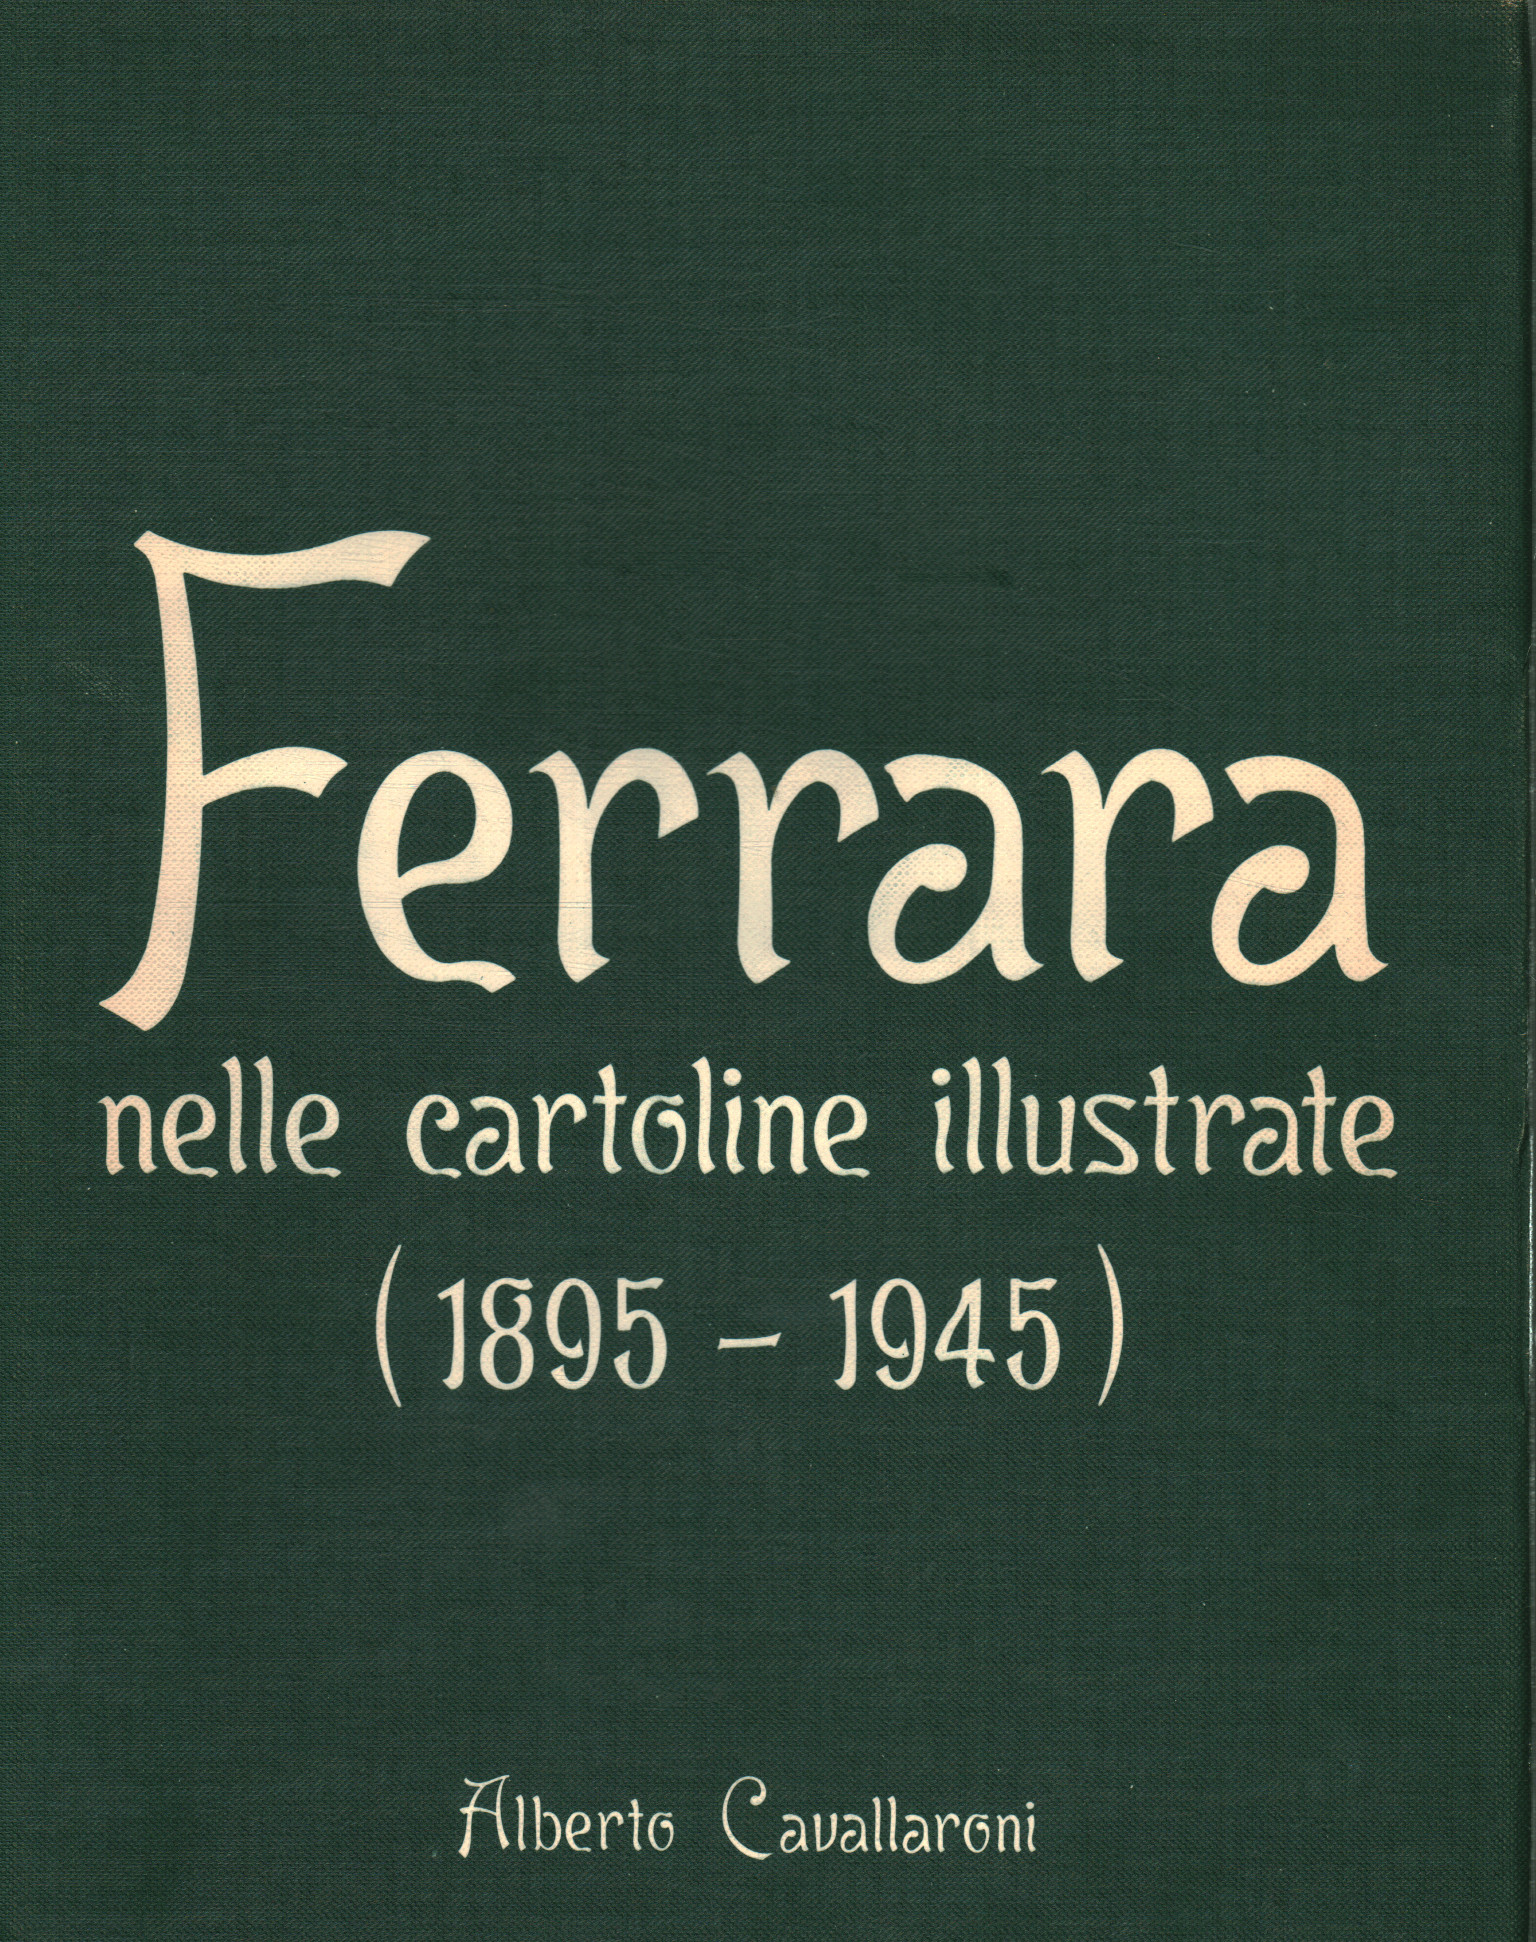 Ferrara in illustrated postcards (1895-1